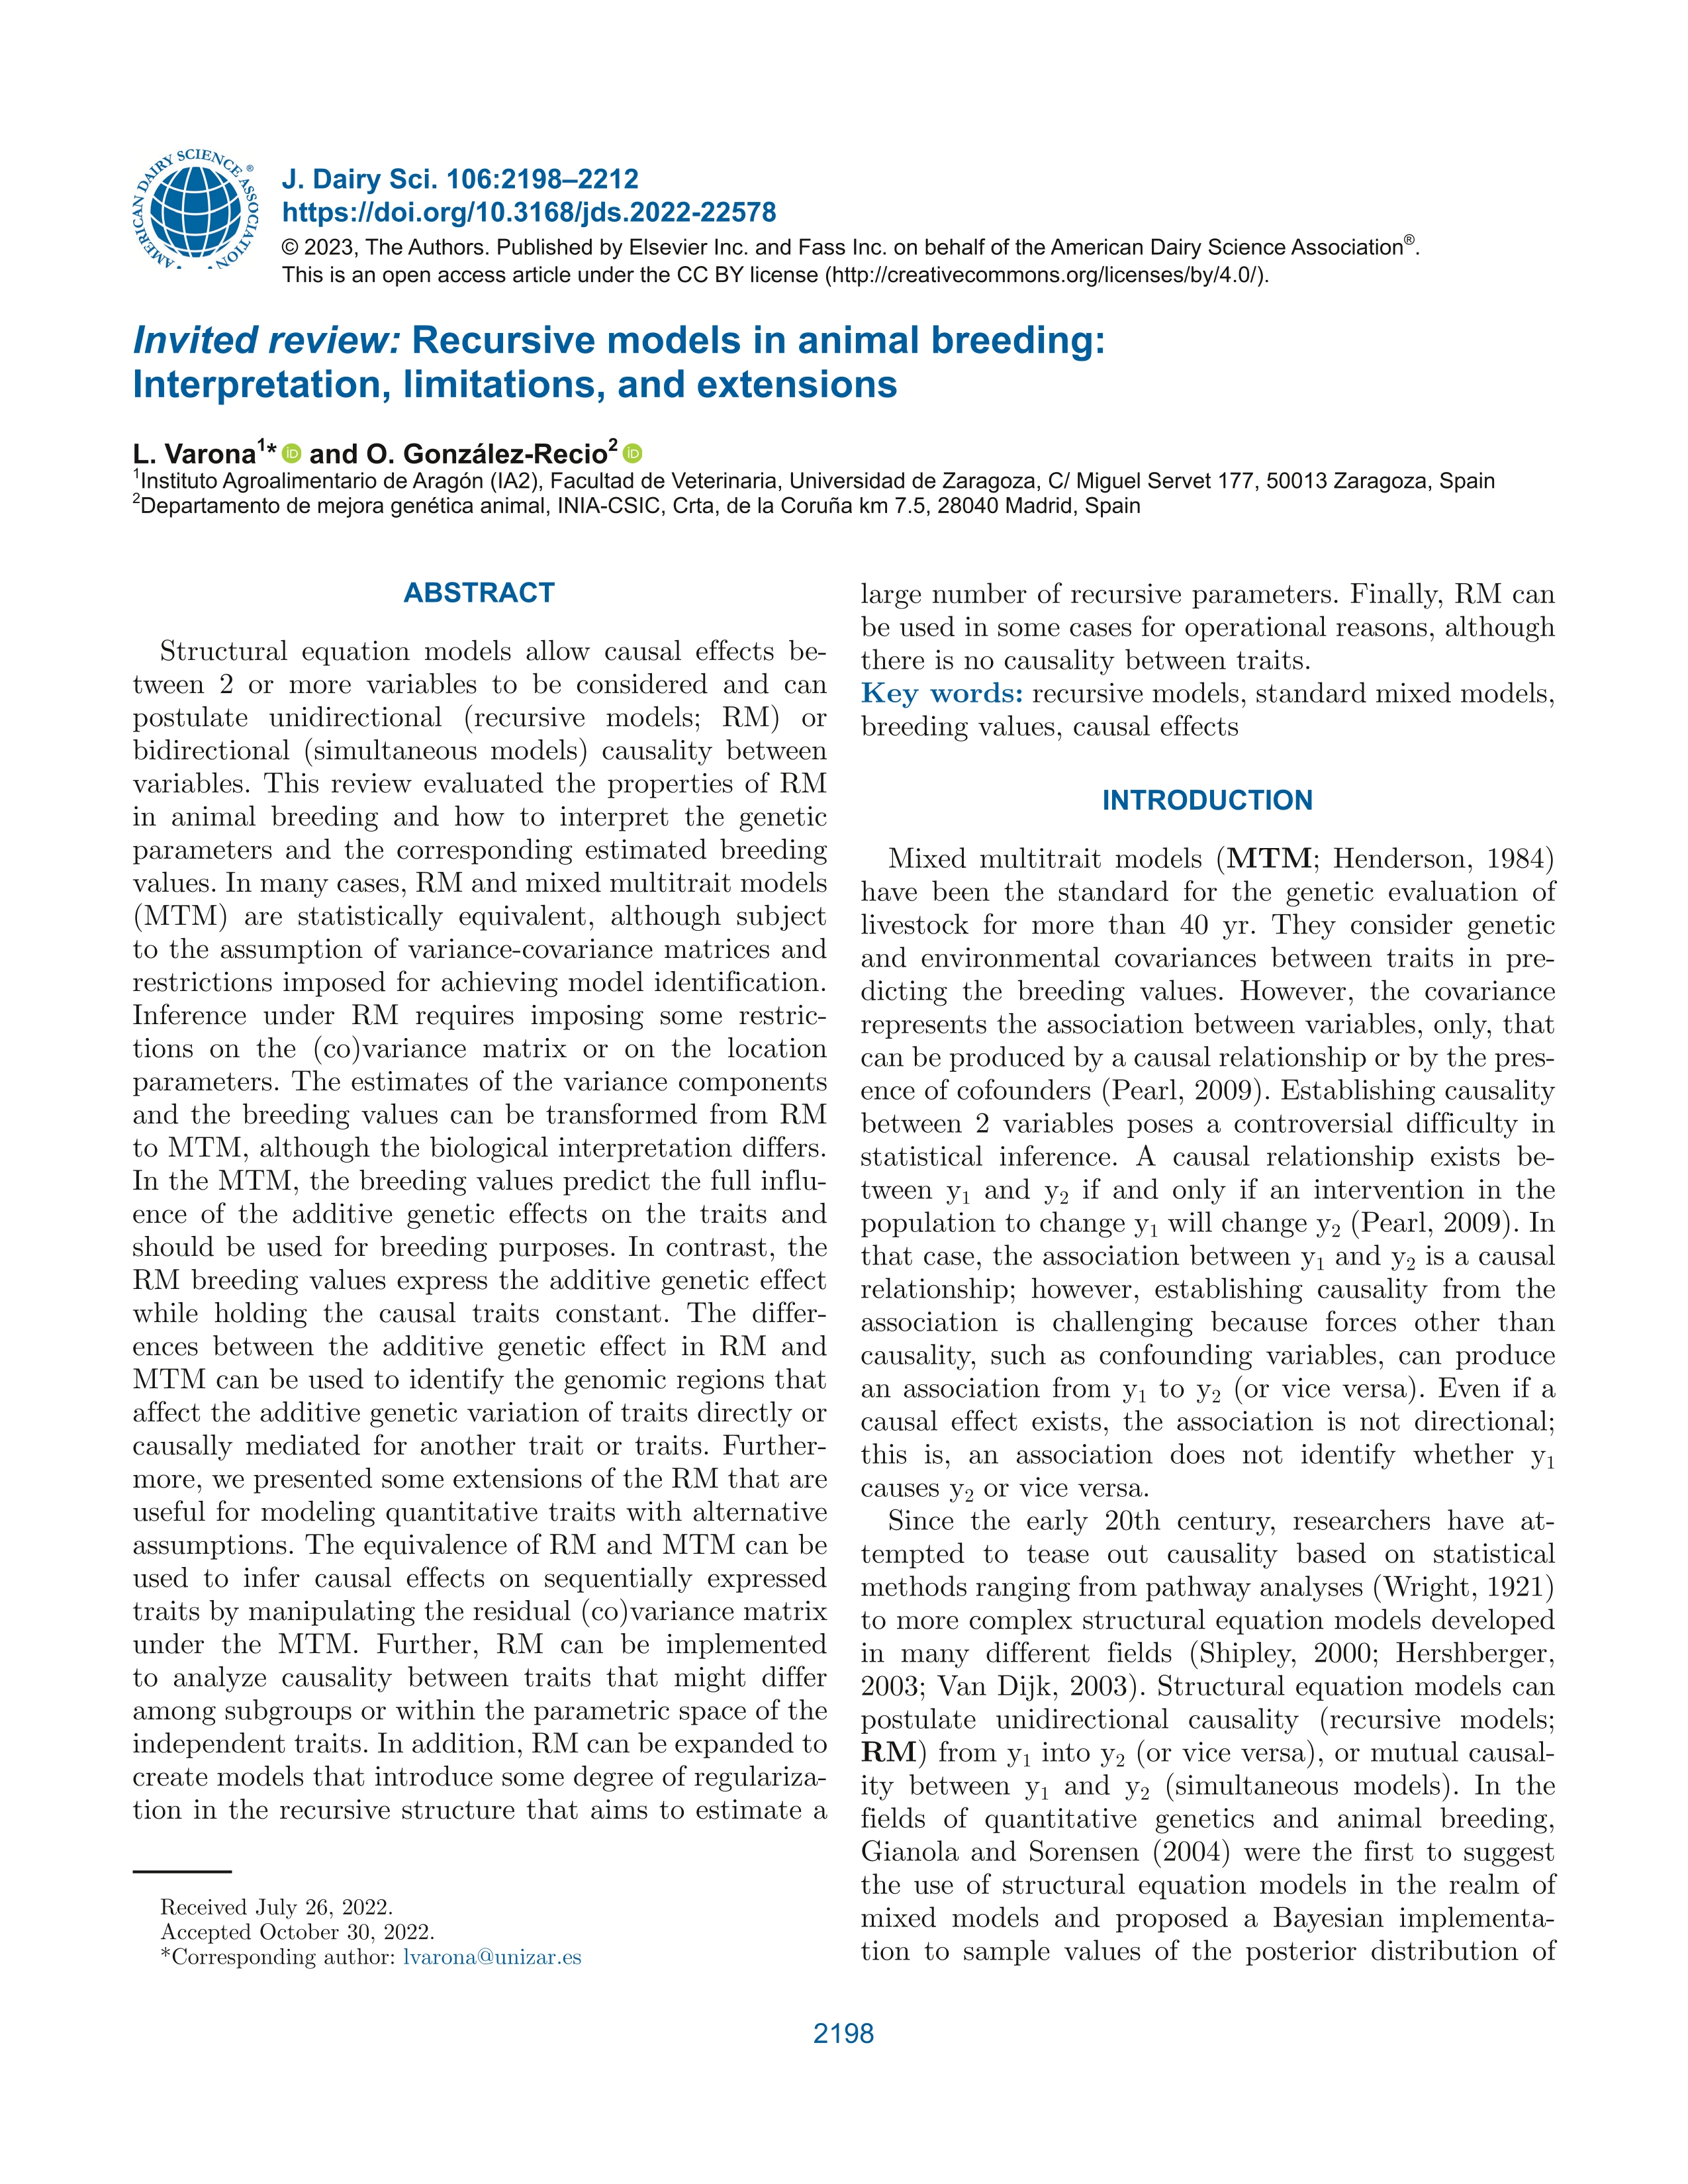 Invited review: Recursive models in animal breeding: Interpretation, limitations, and extensions